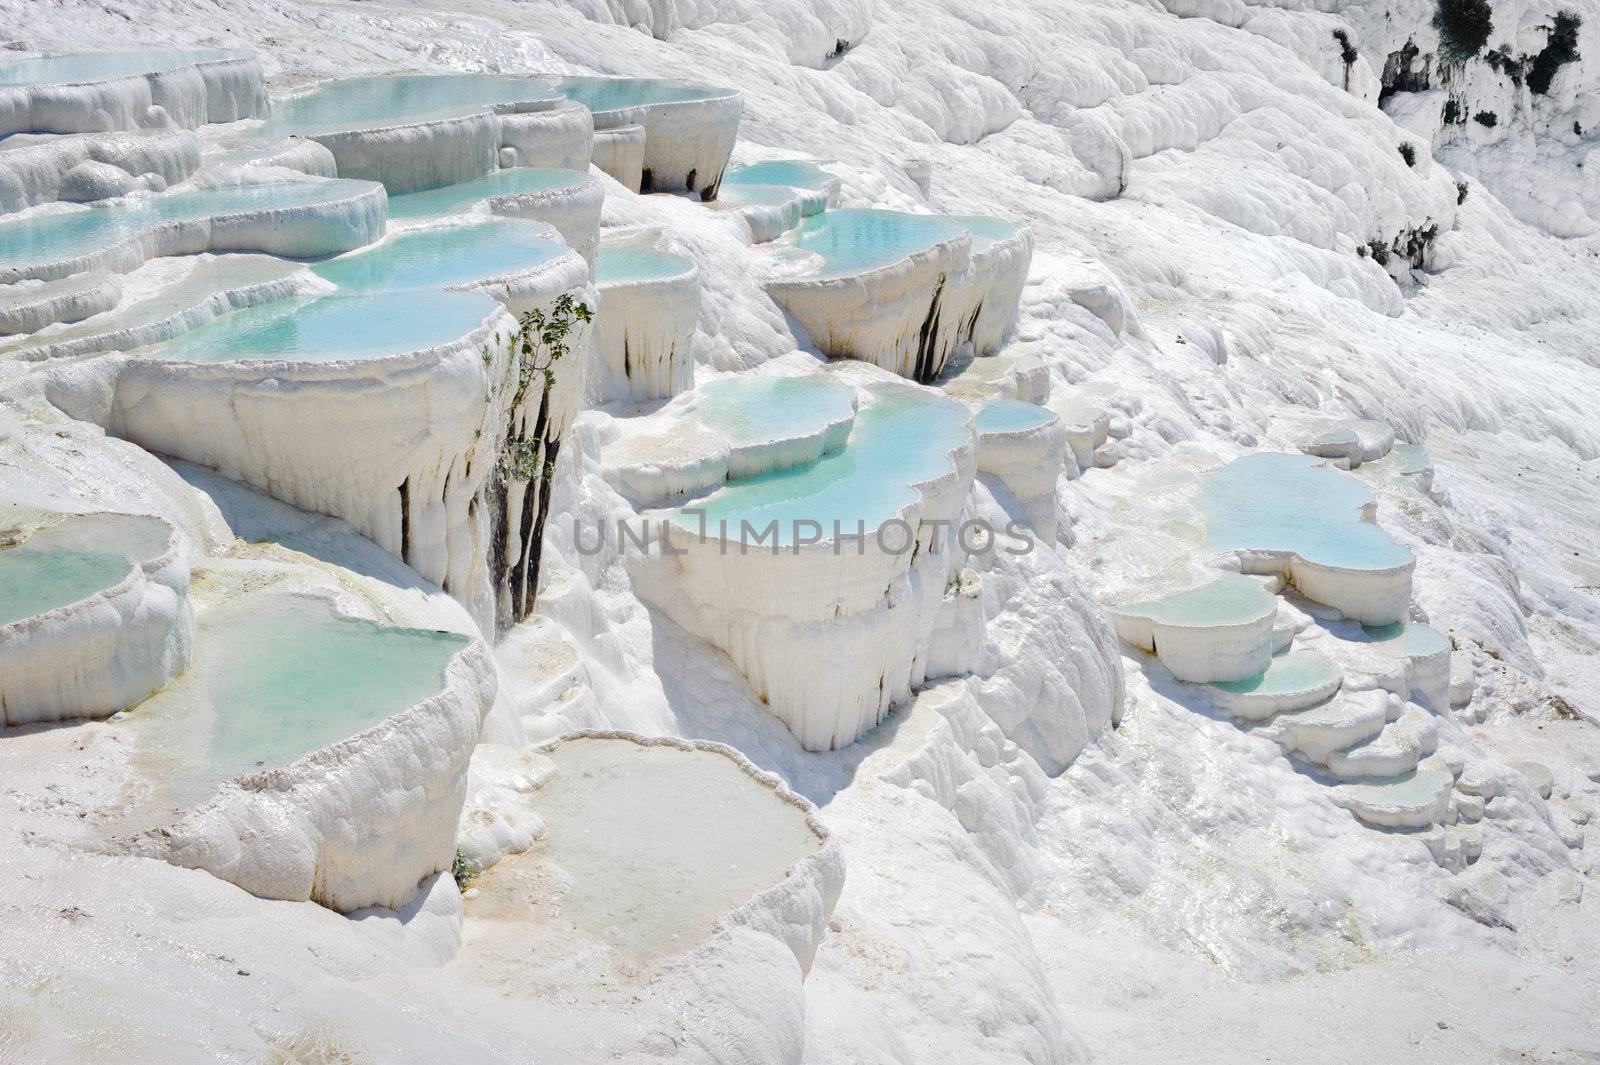 Blue water travertine pools at Pamukkale, Turkey  by starush